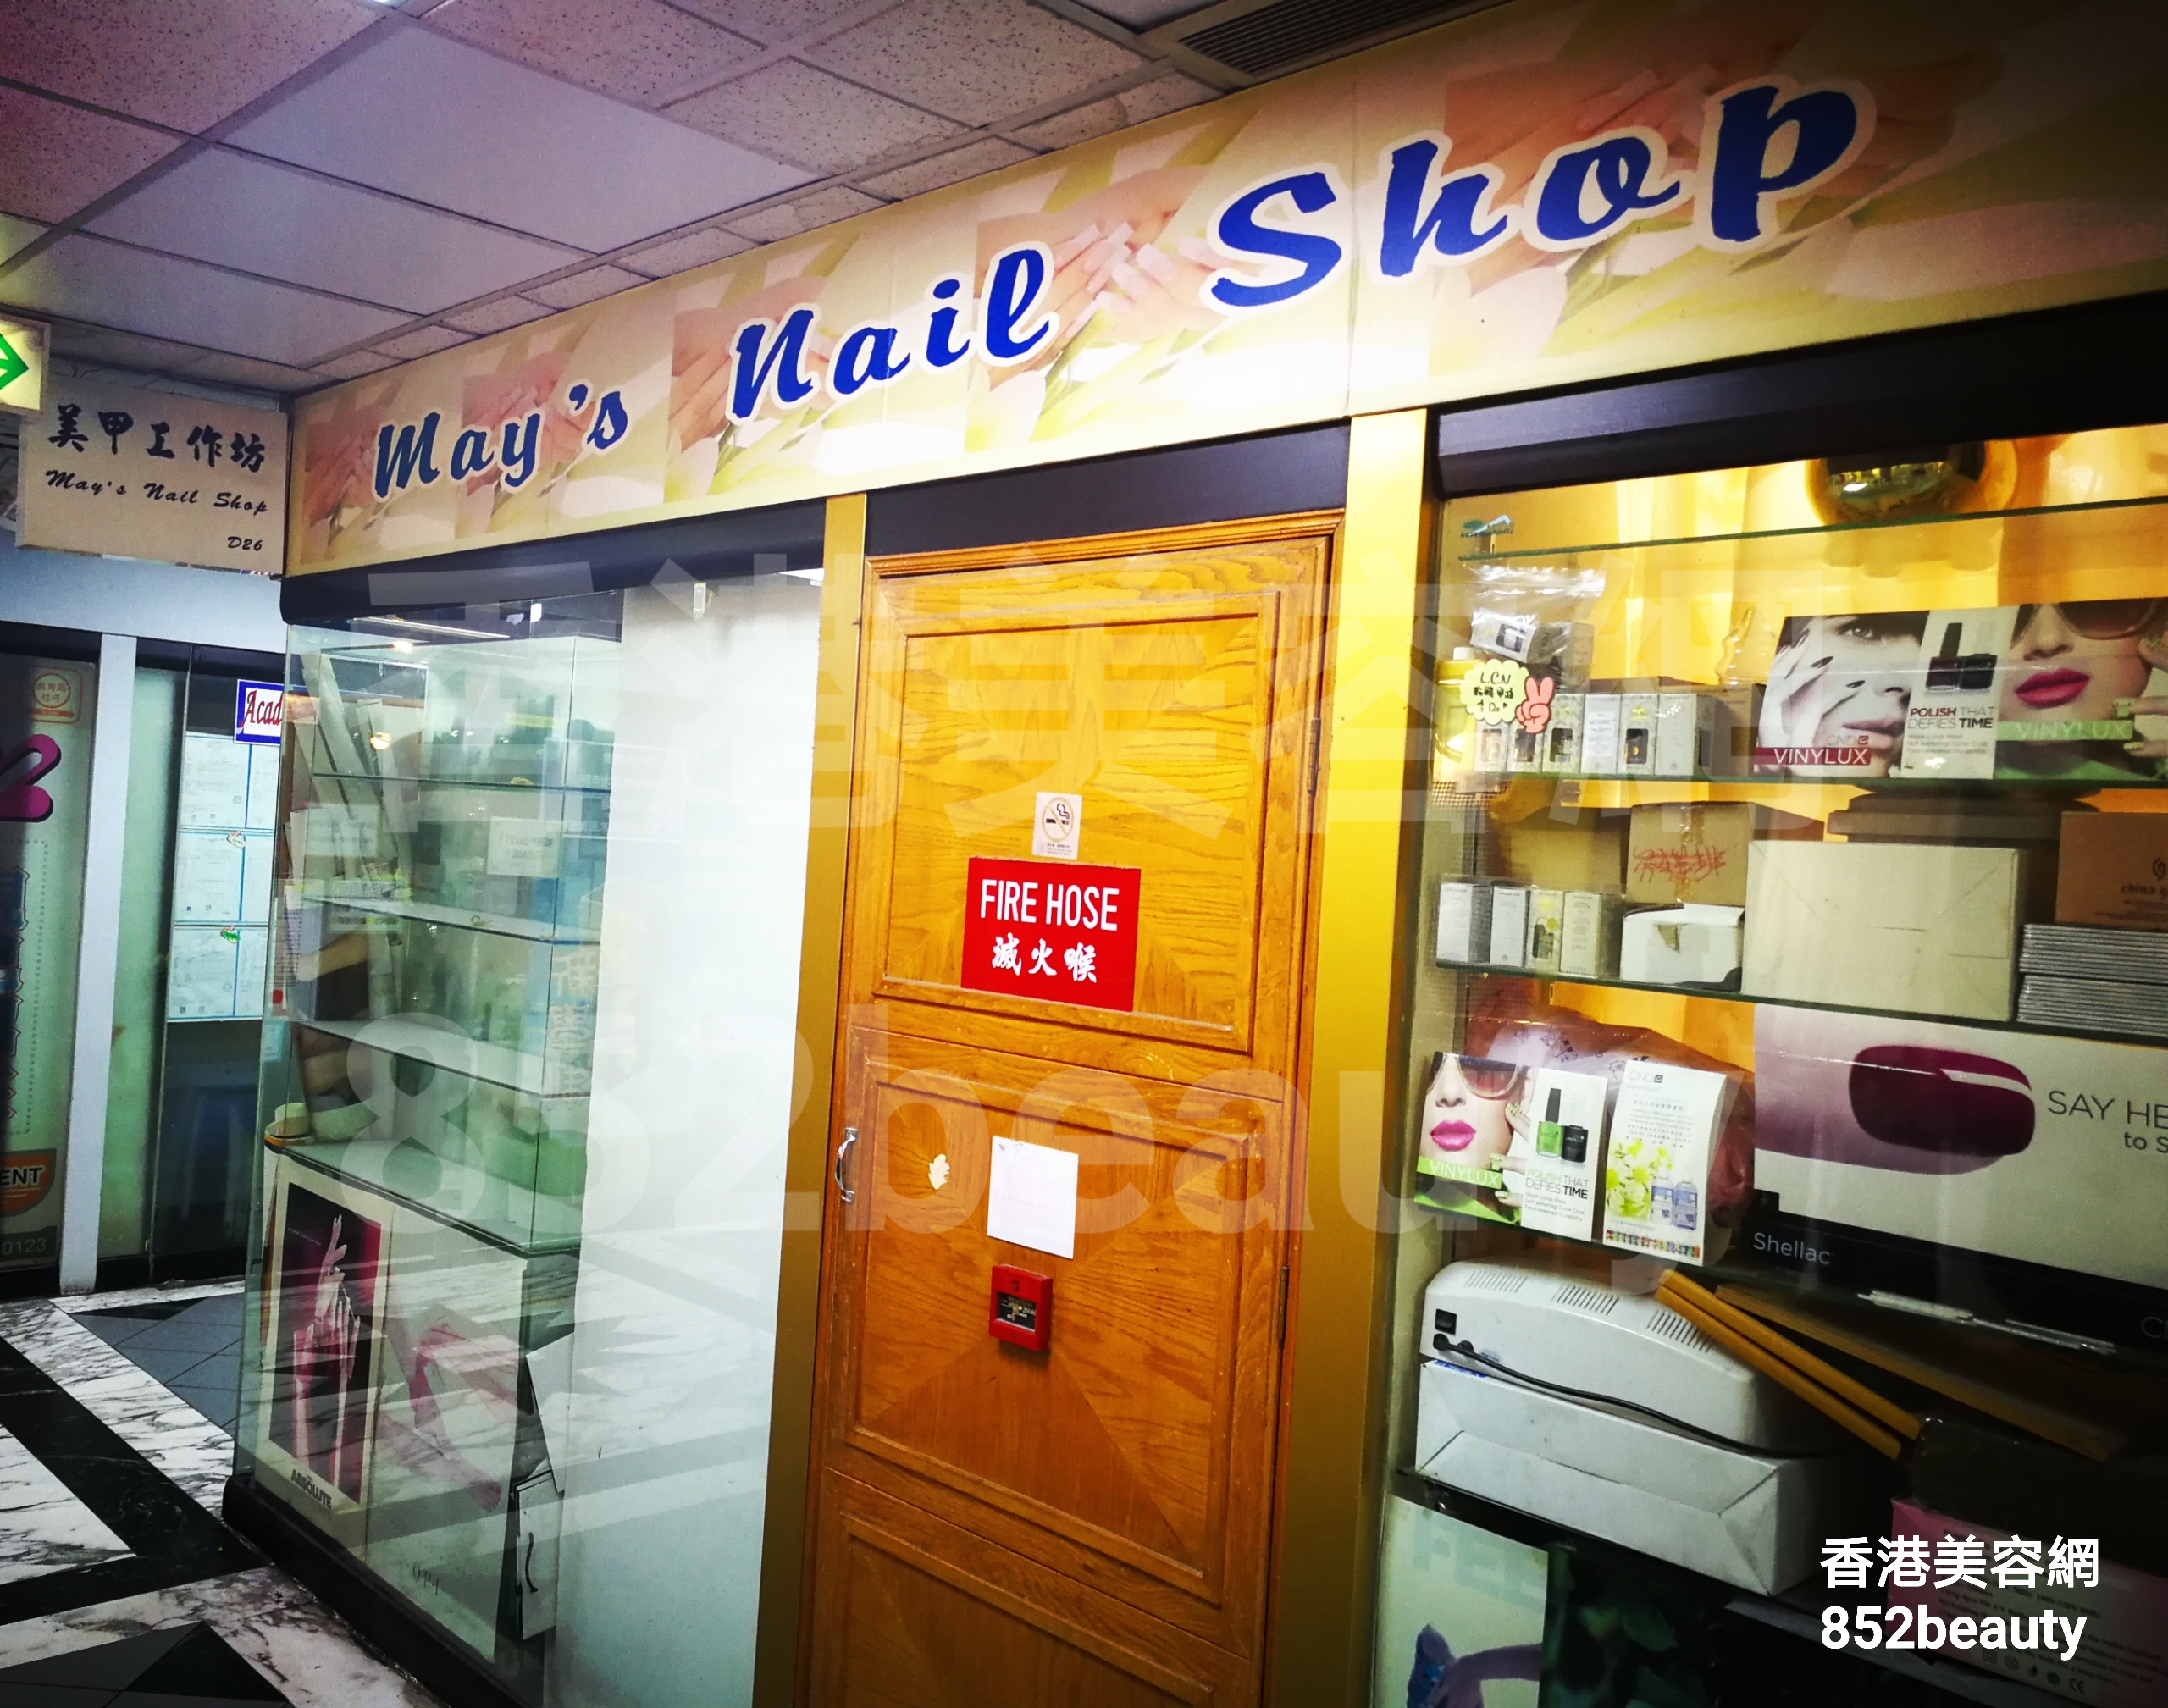 美甲: May's Nail Shop